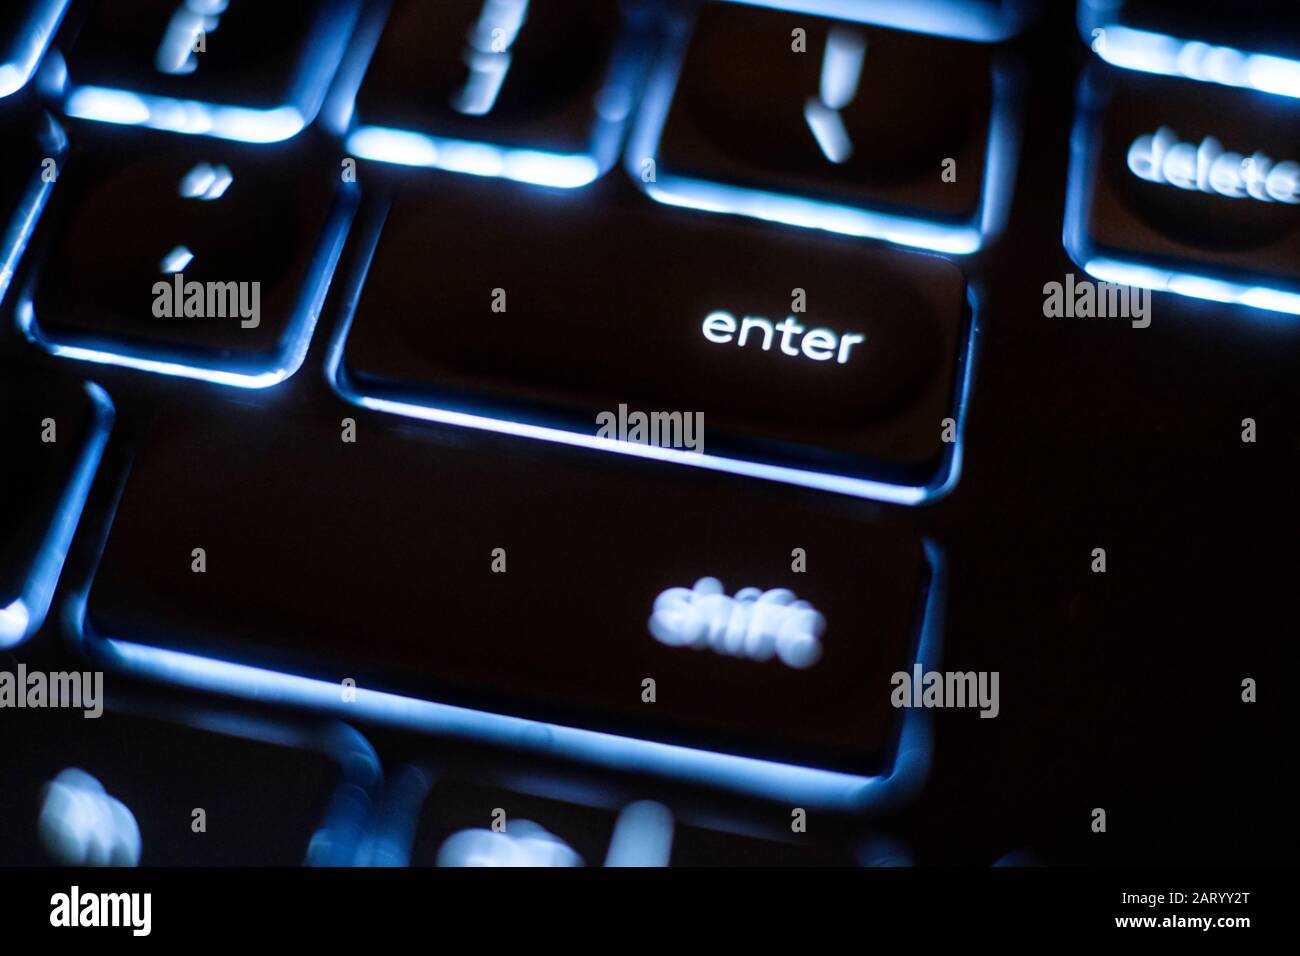 Tasto "ENTER" illuminato sulla tastiera Foto stock - Alamy